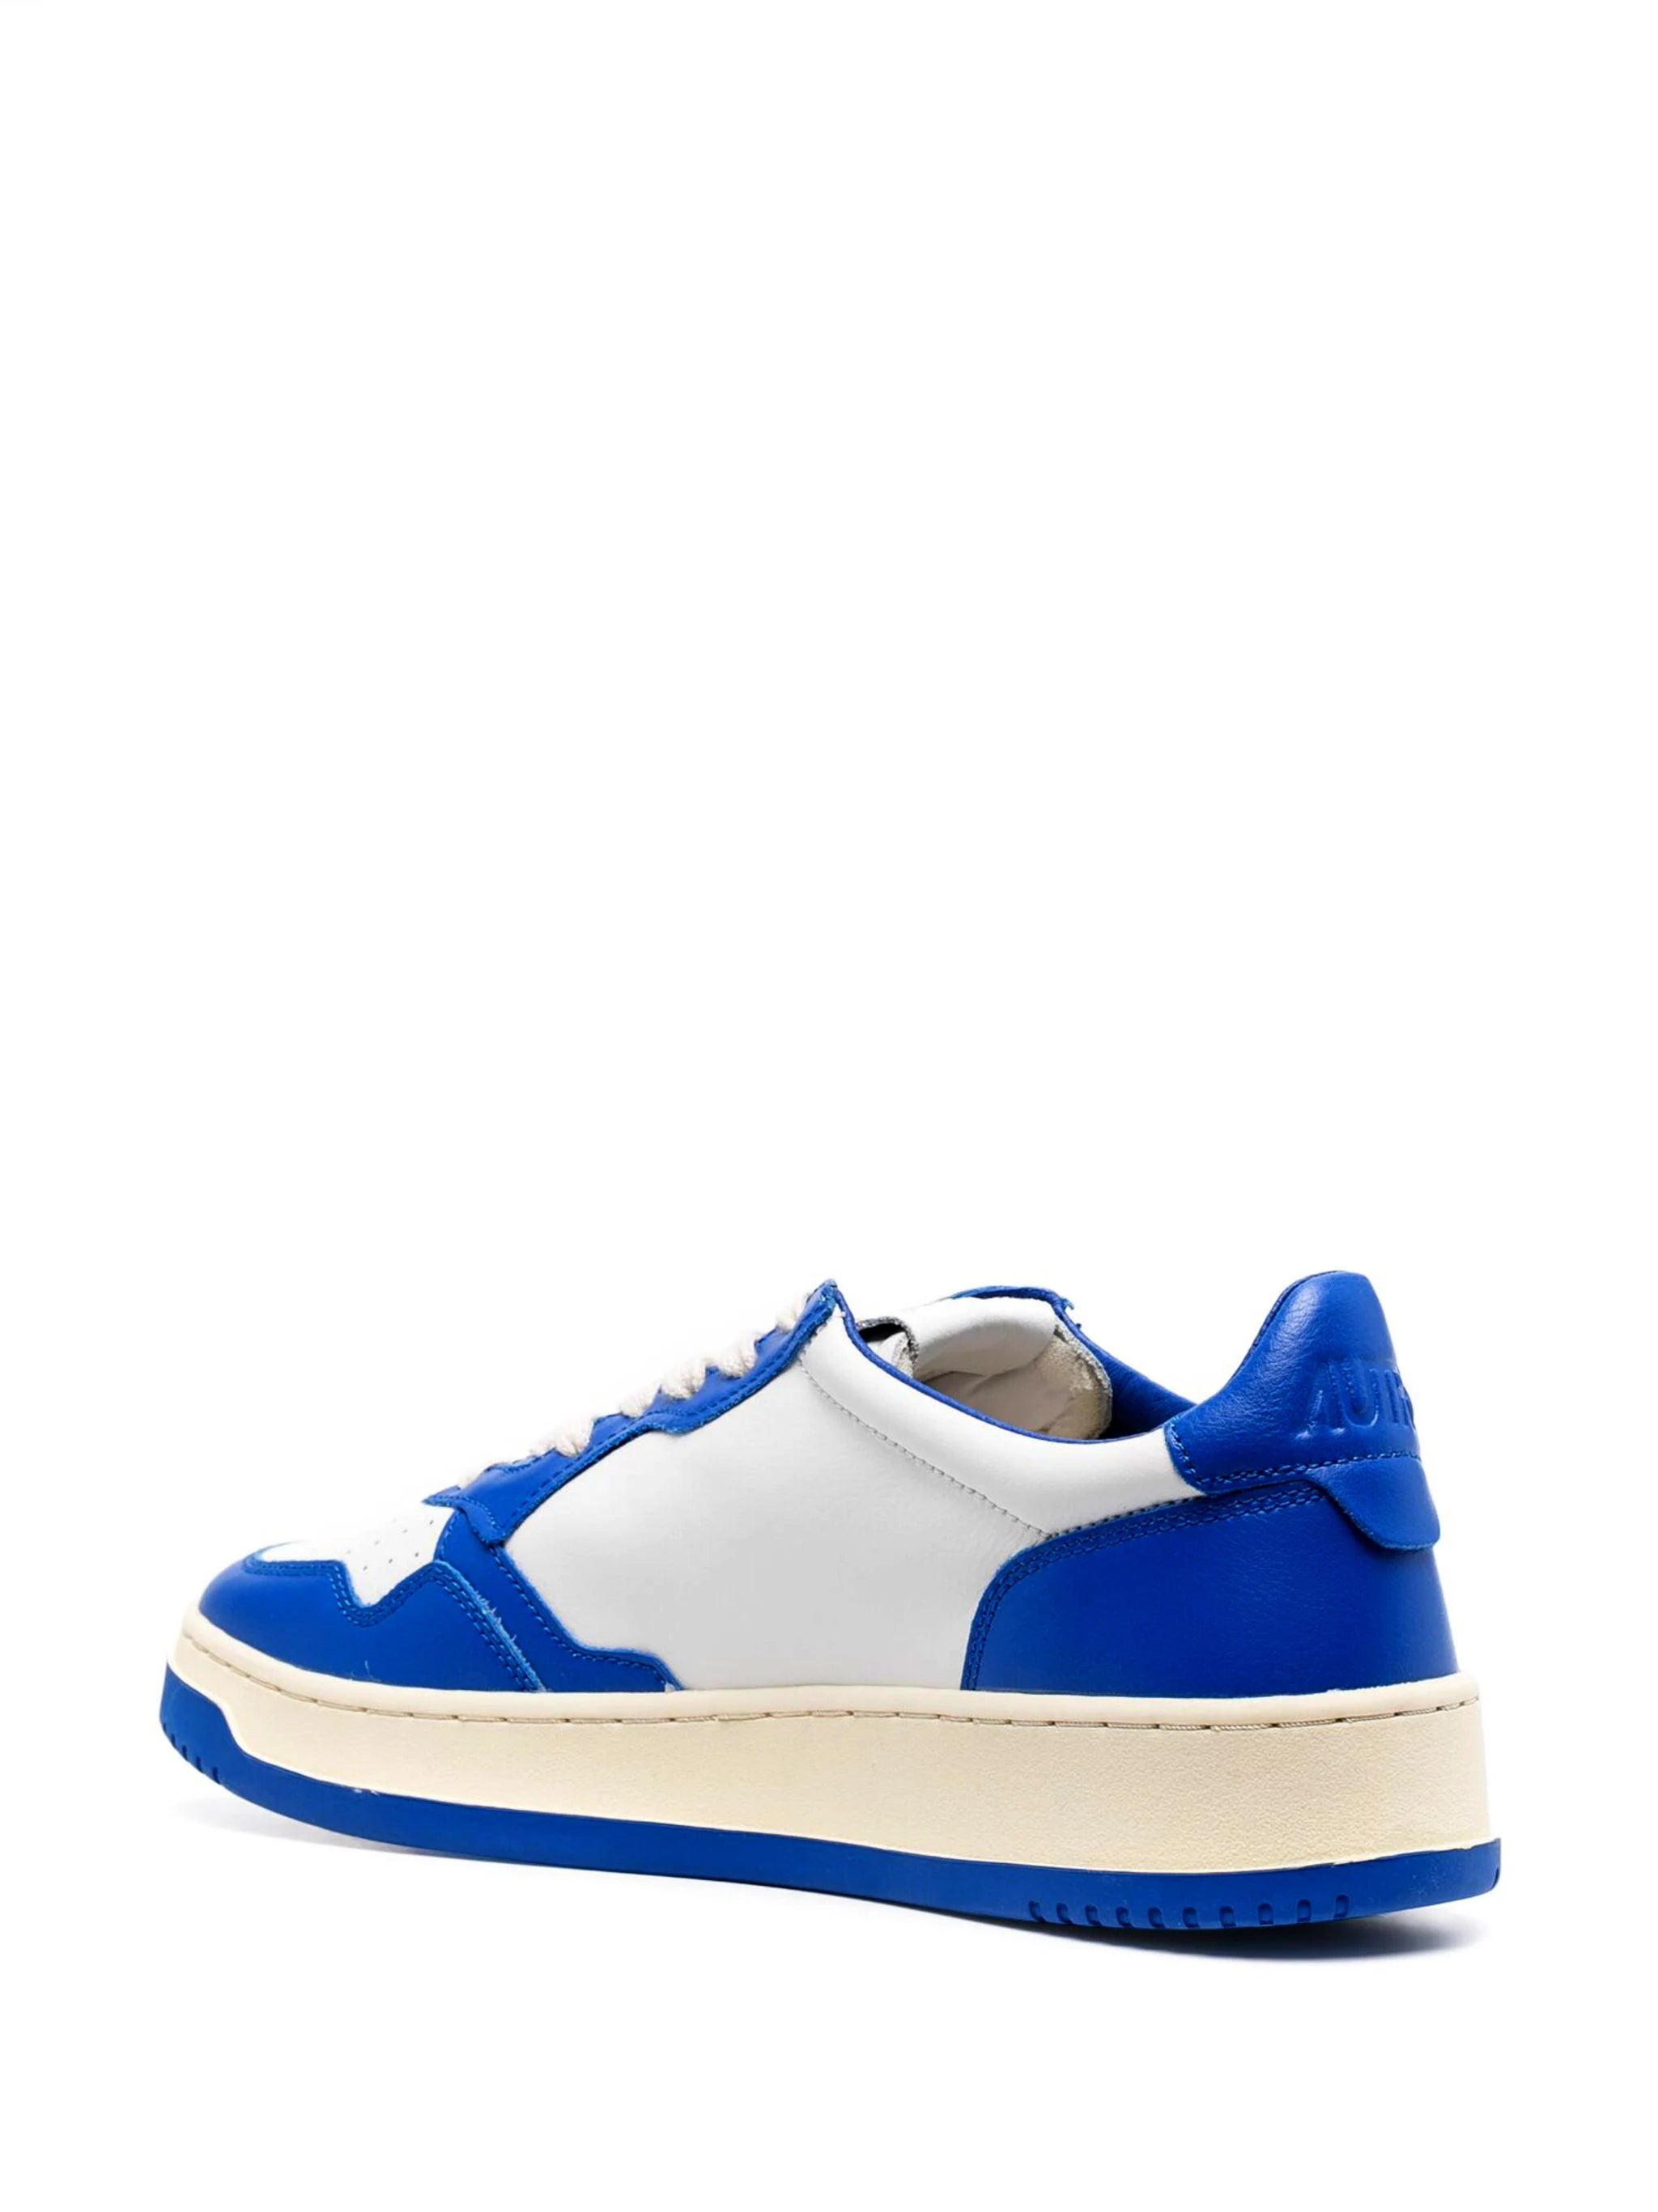 Autry sneakers bicolore bianco bluette - AULMWB15